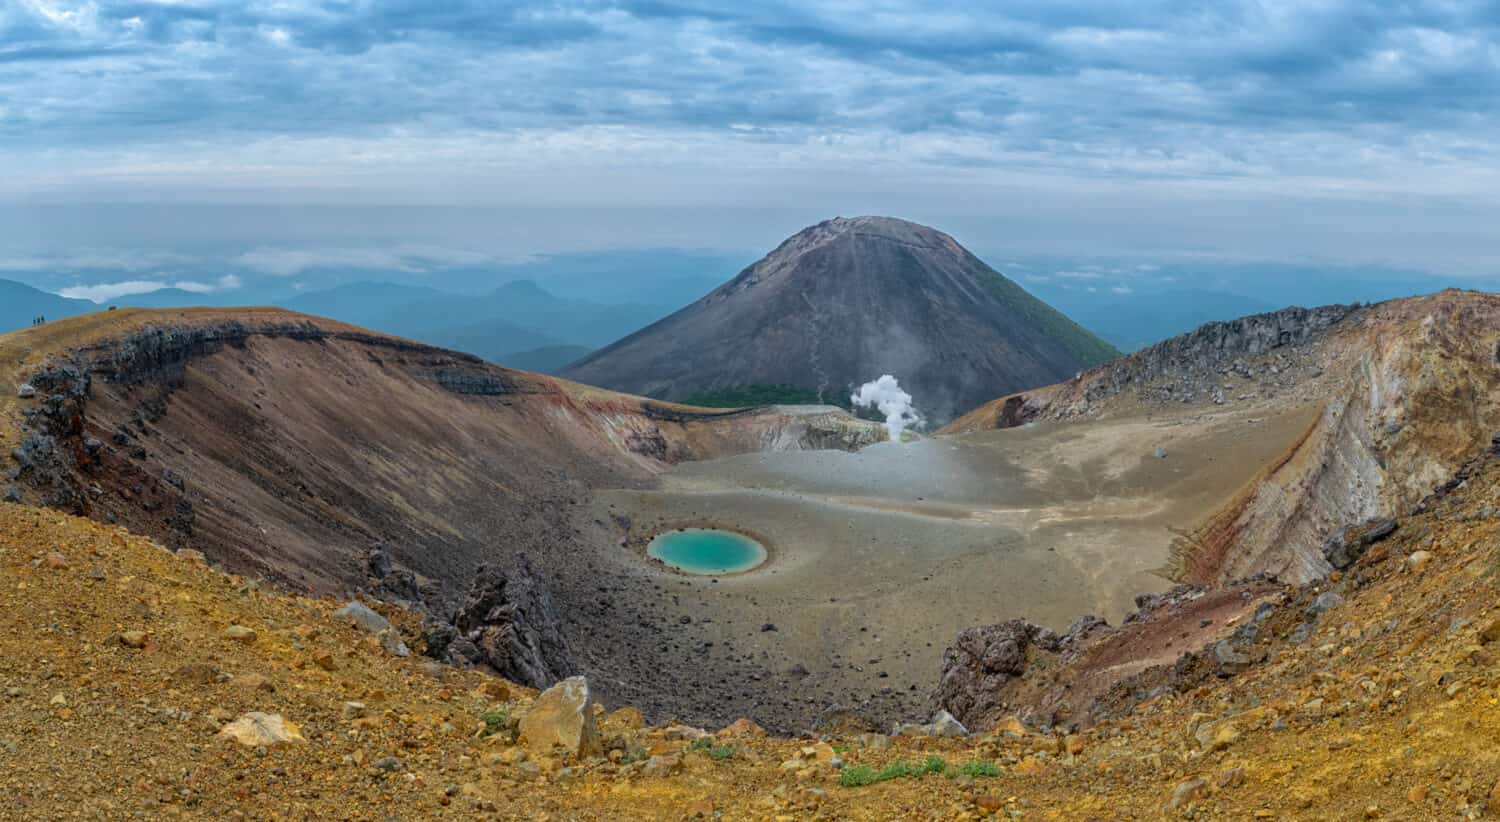 Top of the mount Meakan. Active volcano in Akan Mashu national park, Hokkaido, Japan